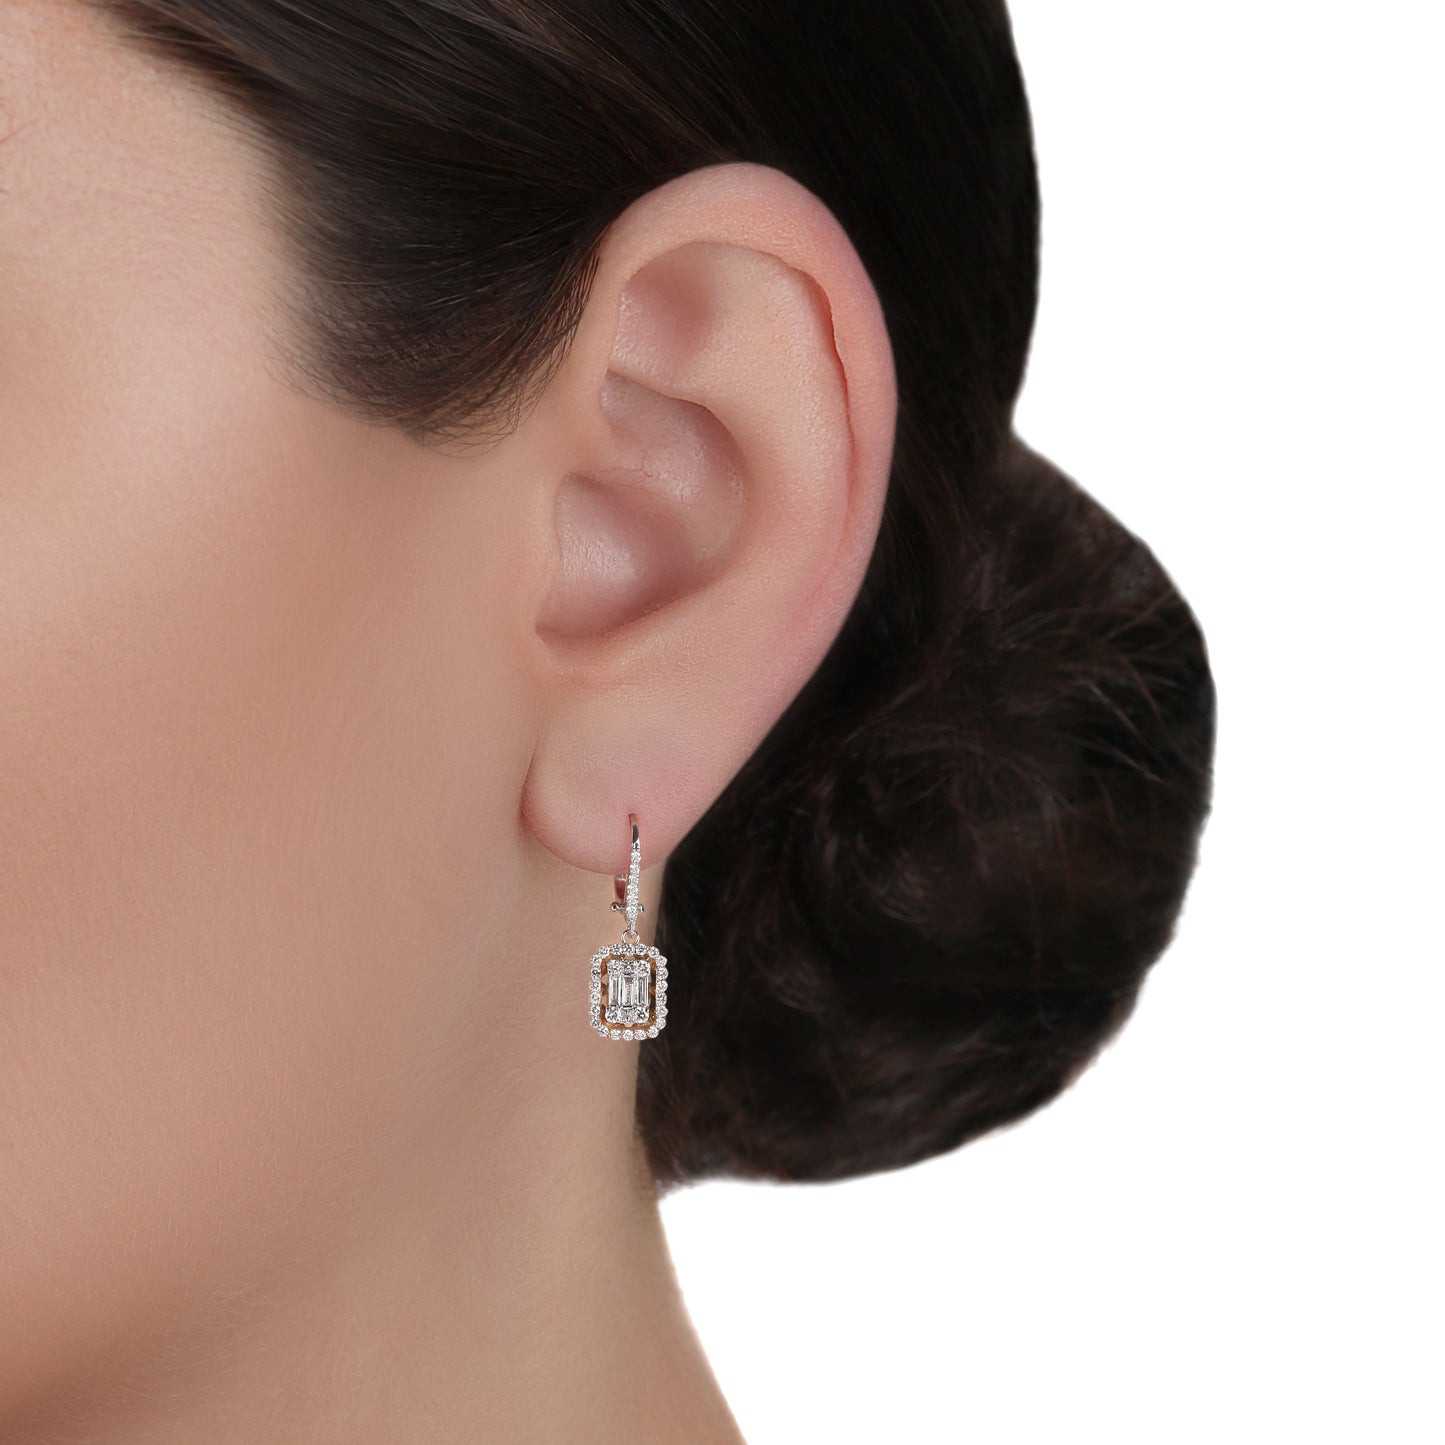  Small Two-Tone Illusion Drop Diamond Earrings | Shopping Website